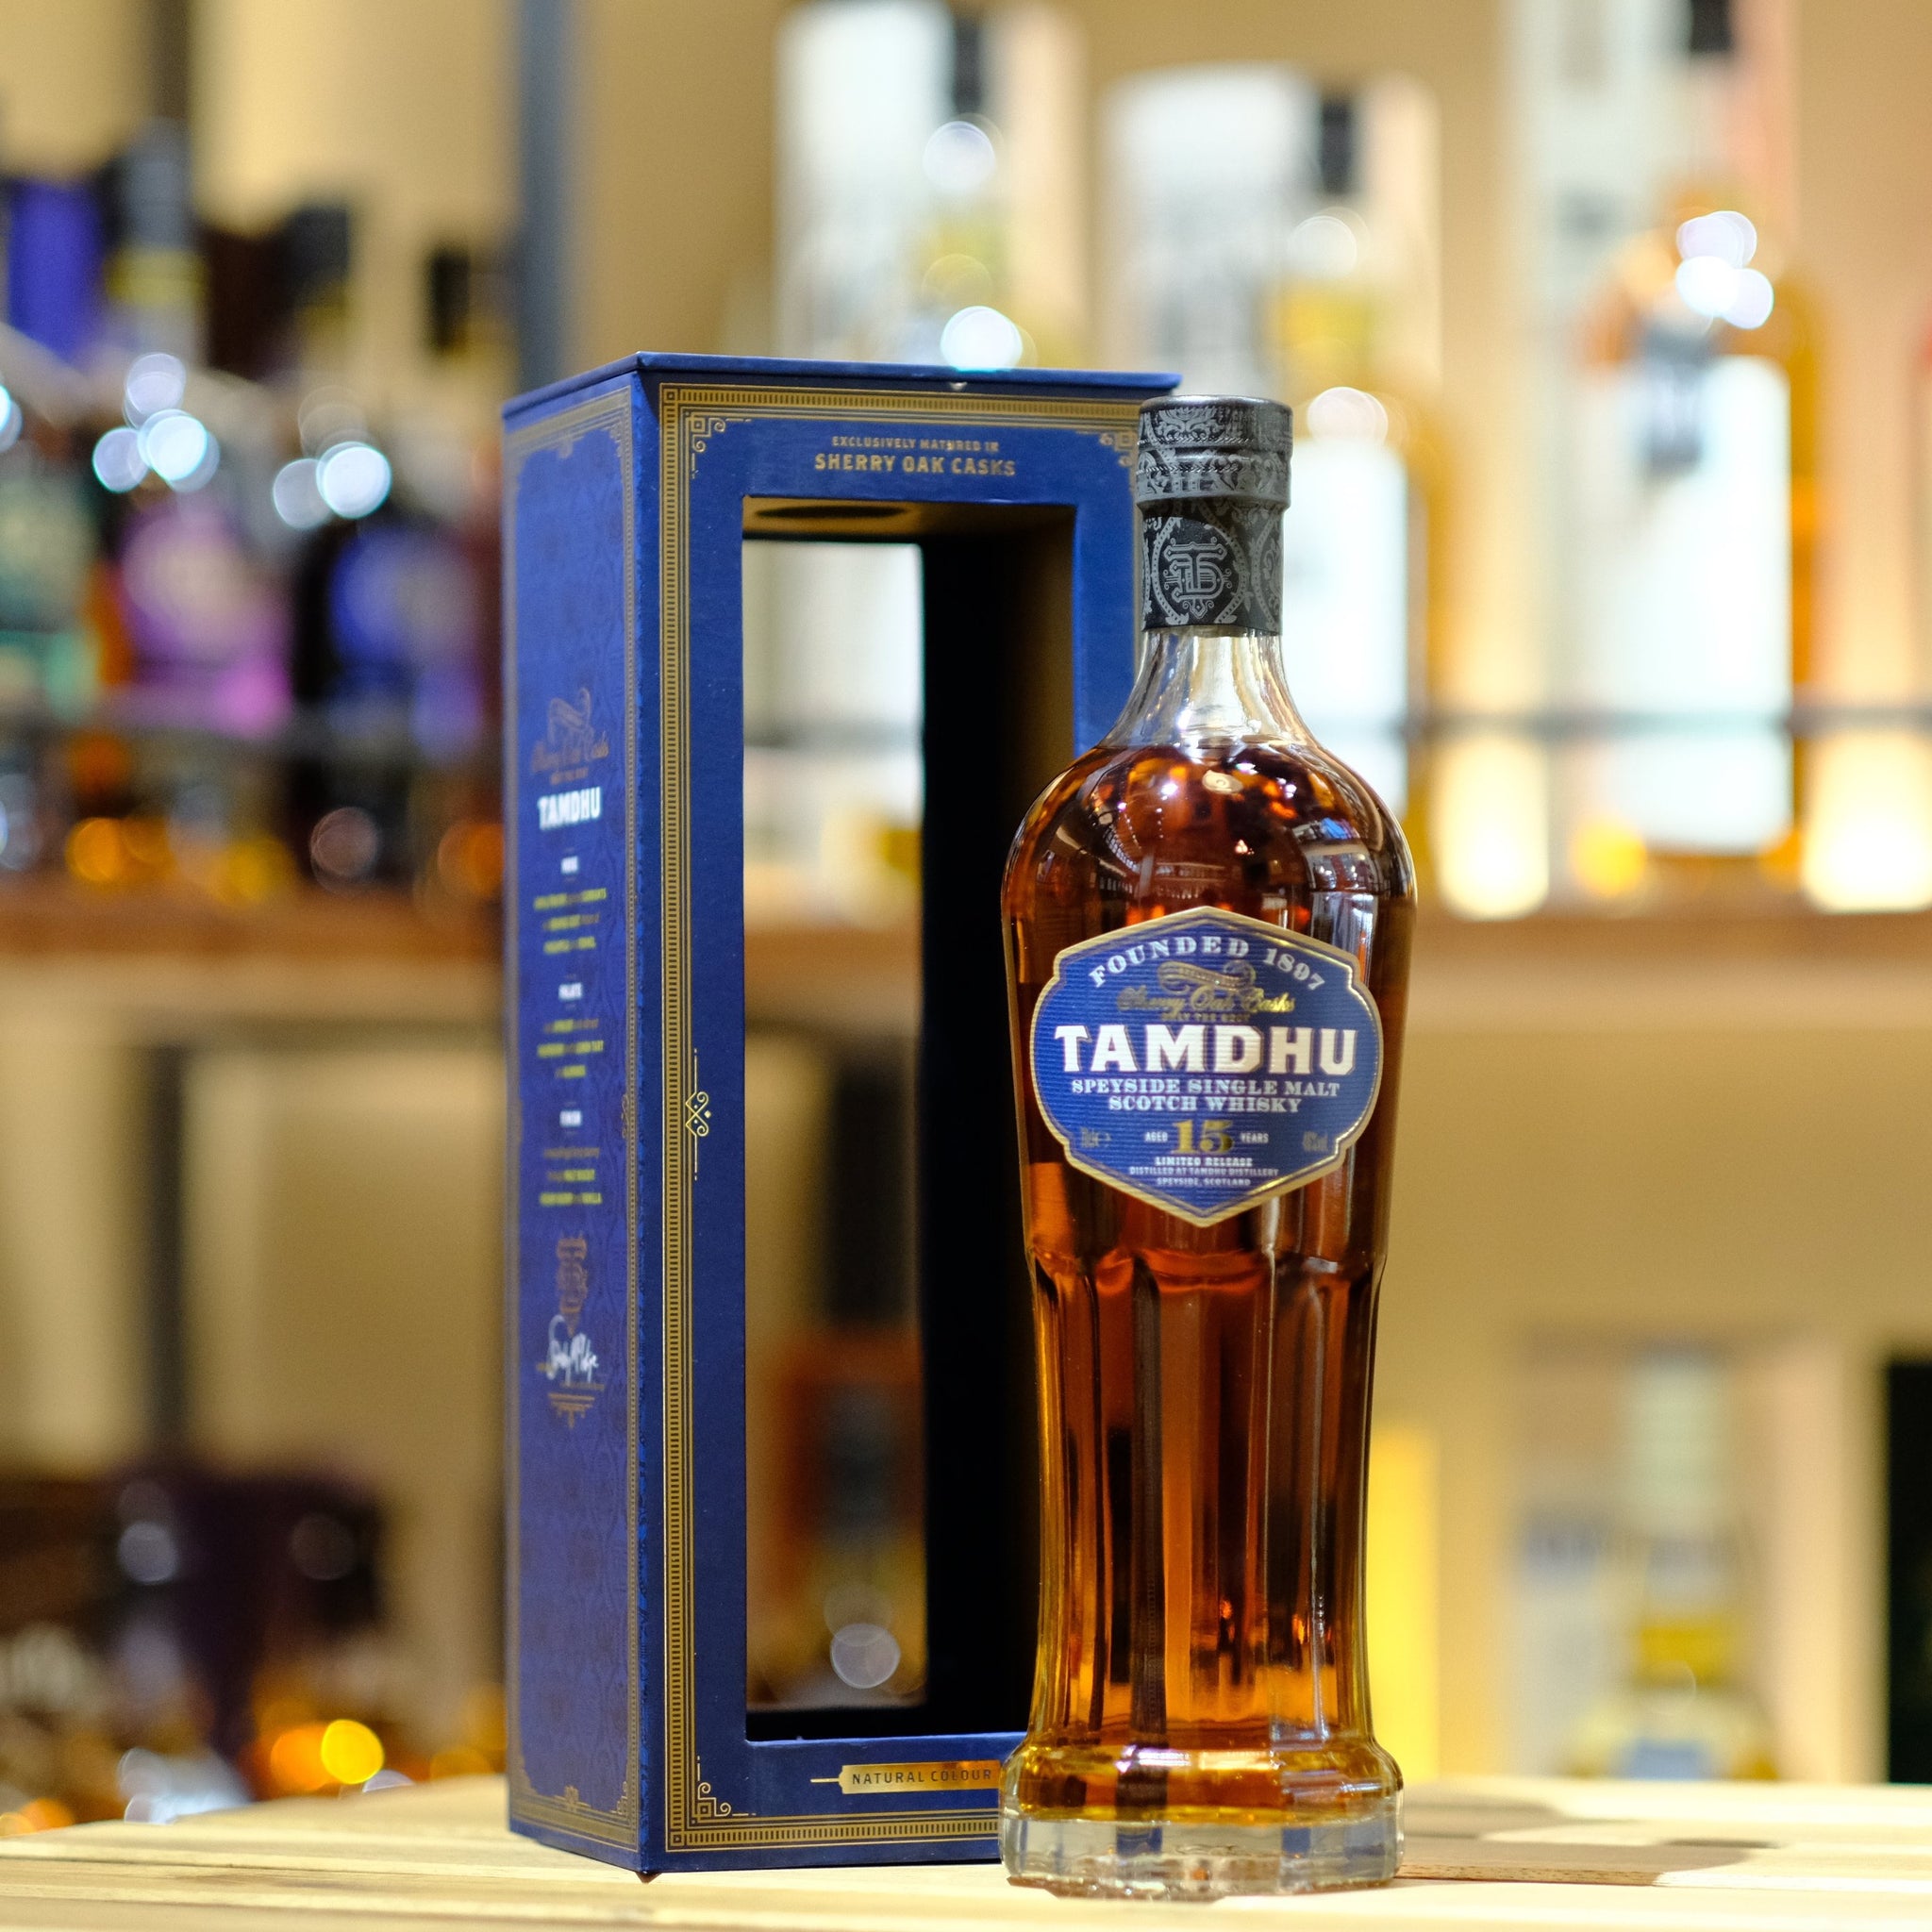 Tamdhu 15 Year Old Limited Release Single Malt Scotch Whisky